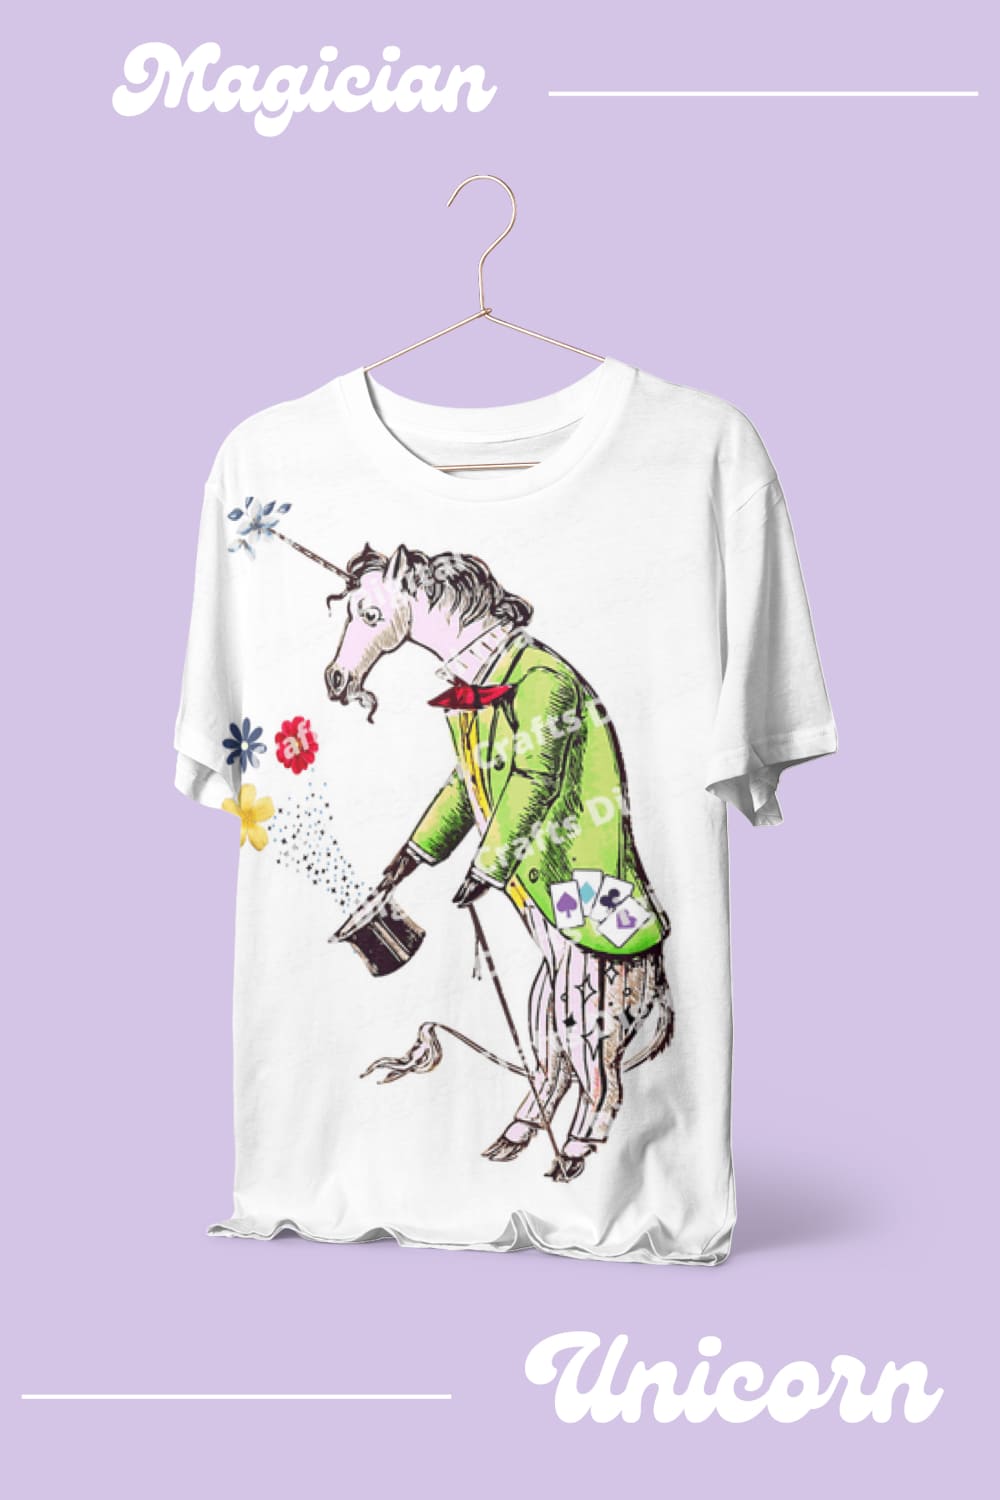 T-shirt with a unicorn print.